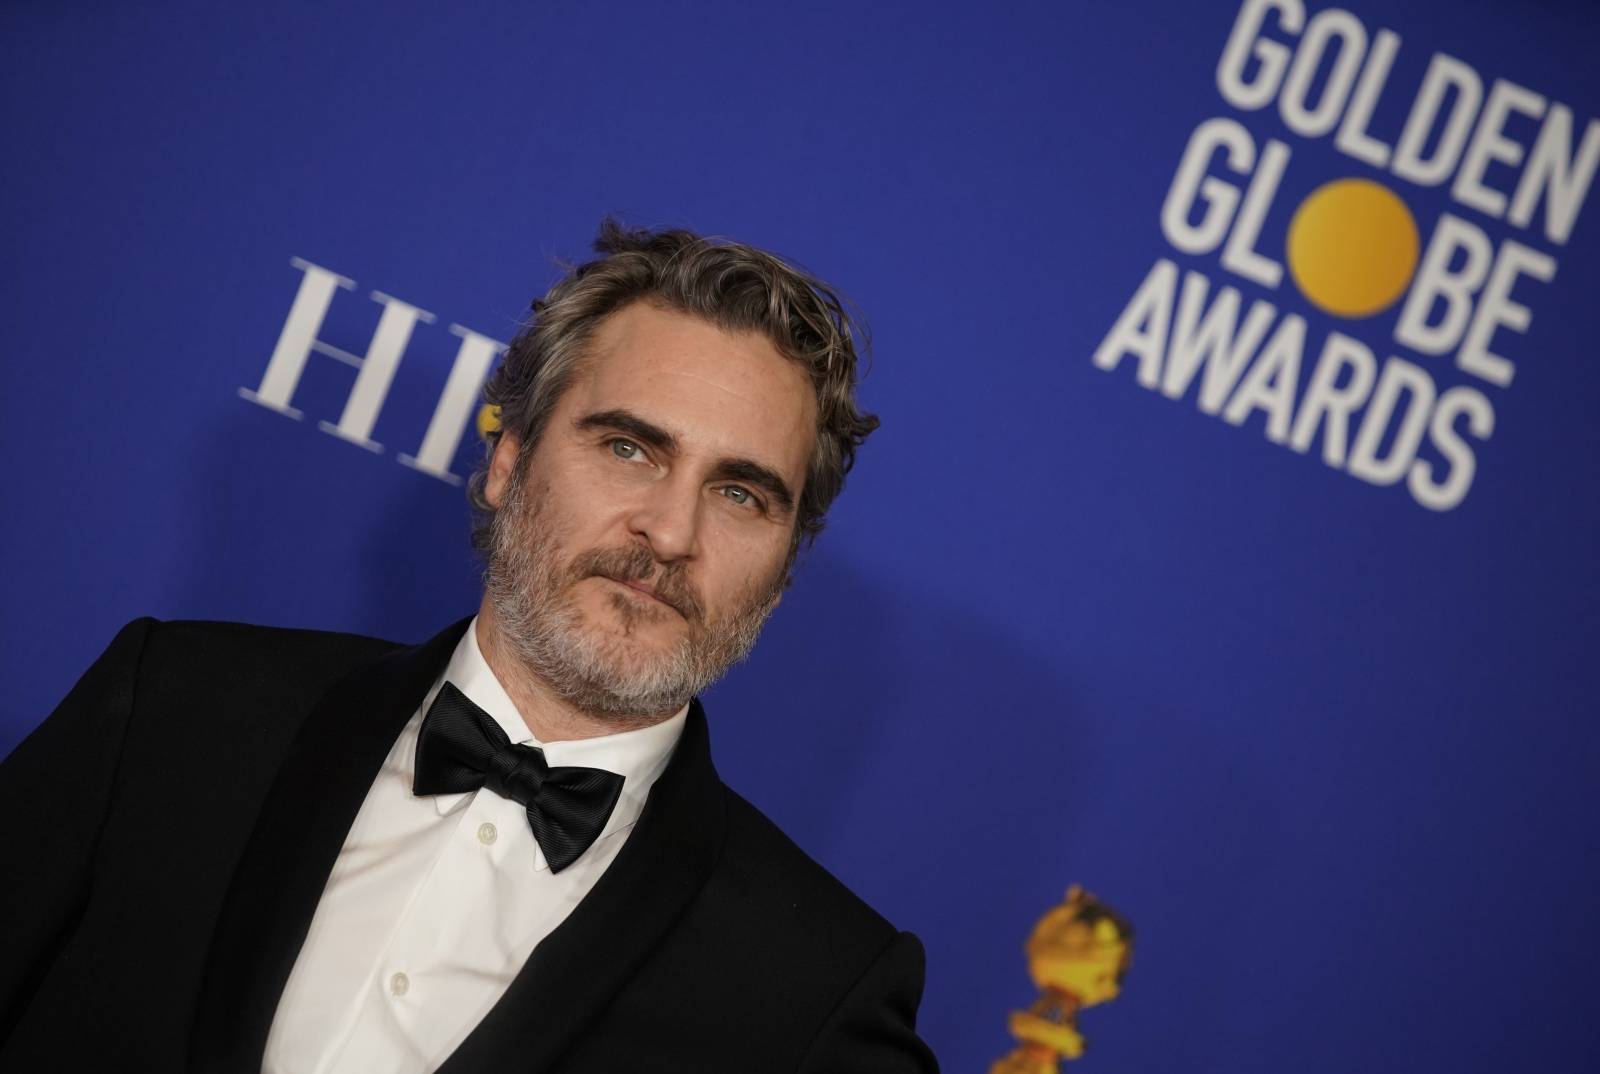 77th Golden Globe Awards - Photo Room - Beverly Hills, California, U.S., January 5, 2020 - Joaquin Phoenix poses backstage